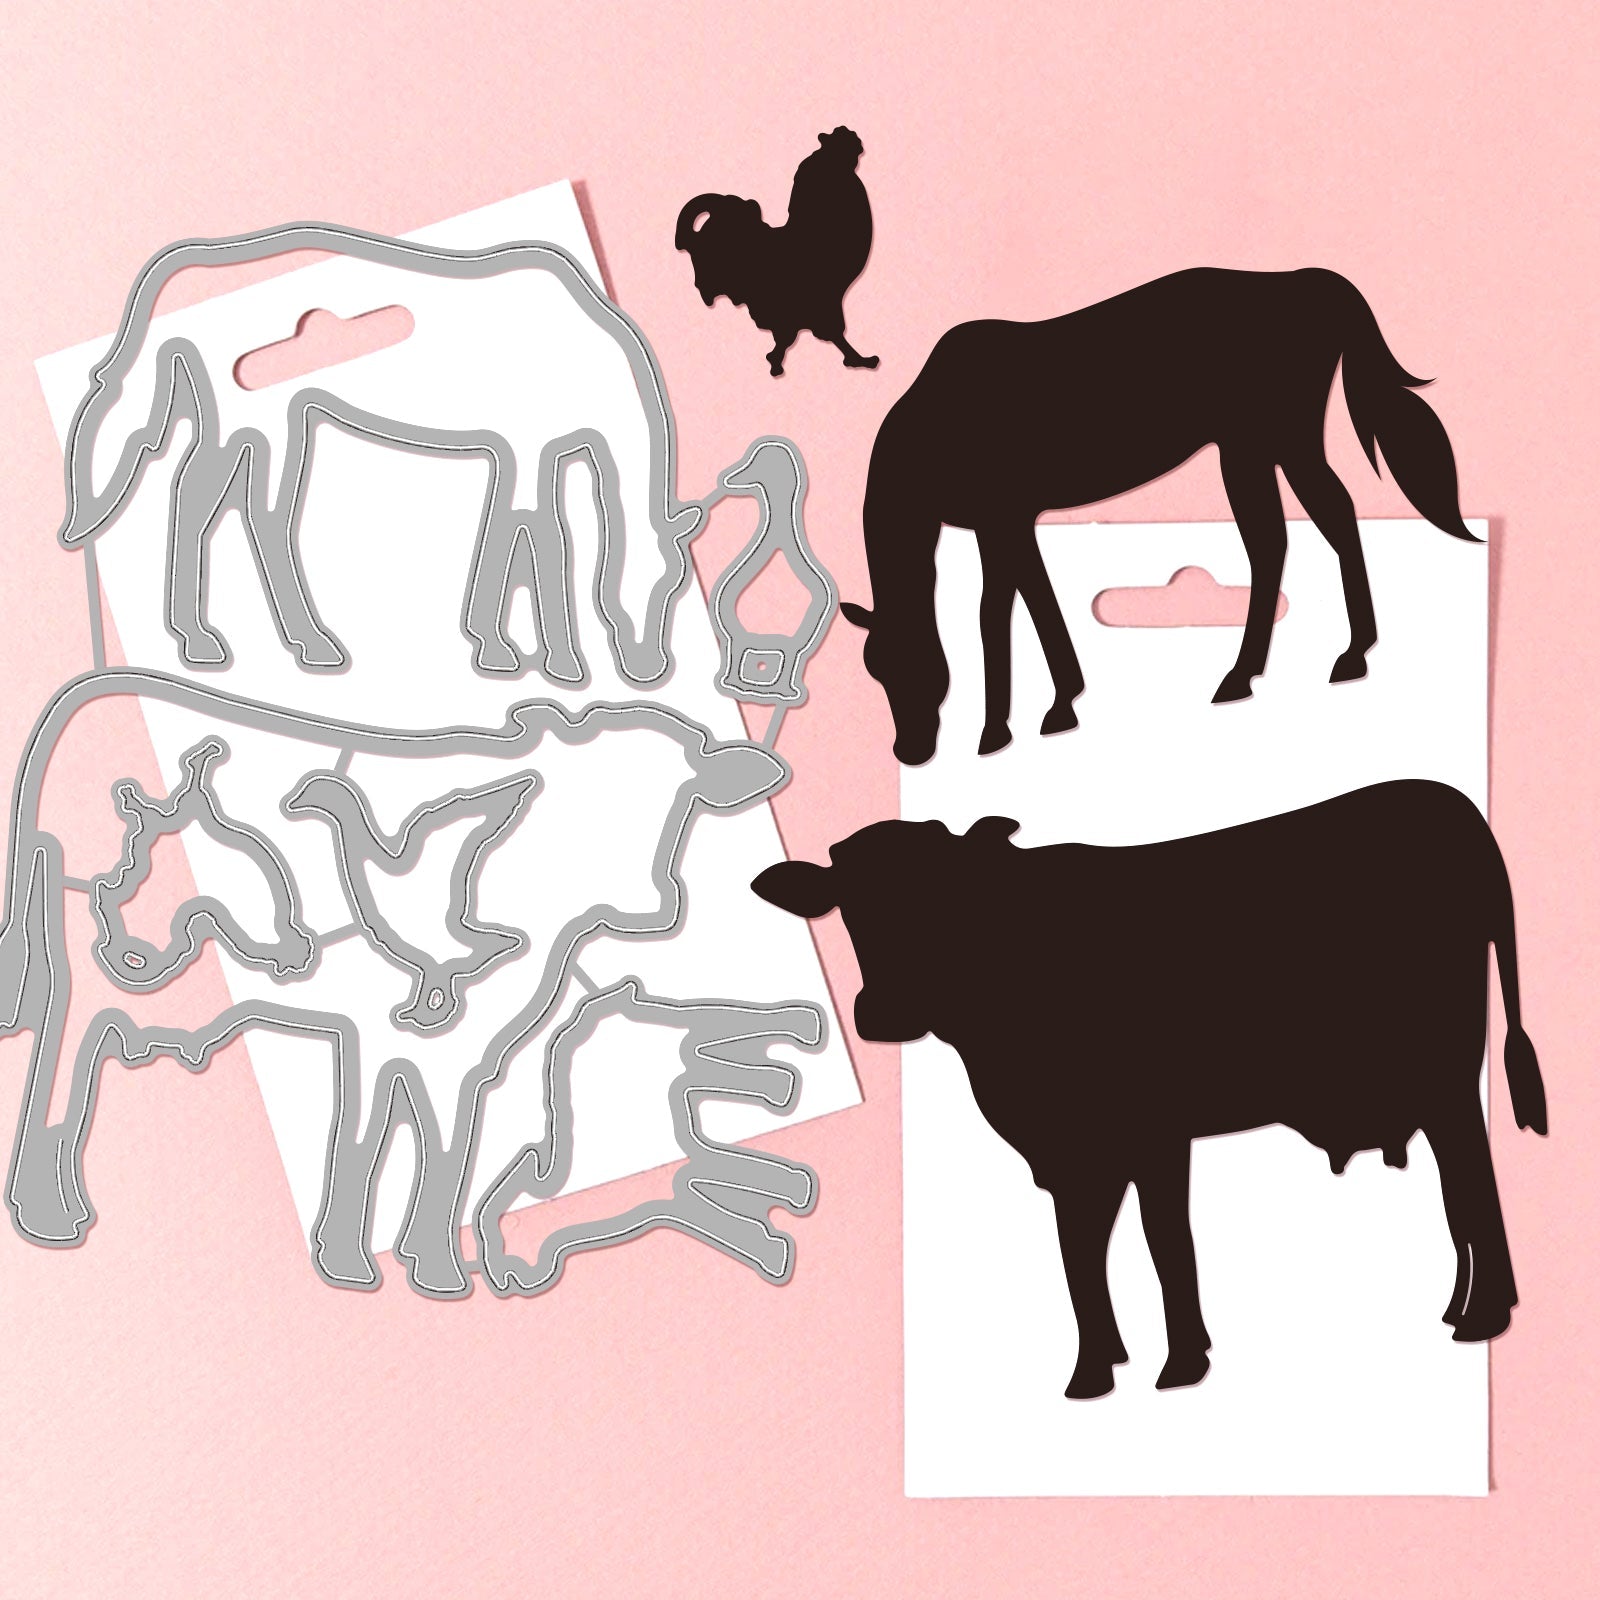 CRASPIRE Animals, Cow, Horse, Chicken, Duck, Sheep Carbon Steel Cutting Dies Stencils, for DIY Scrapbooking/Photo Album, Decorative Embossing DIY Paper Card